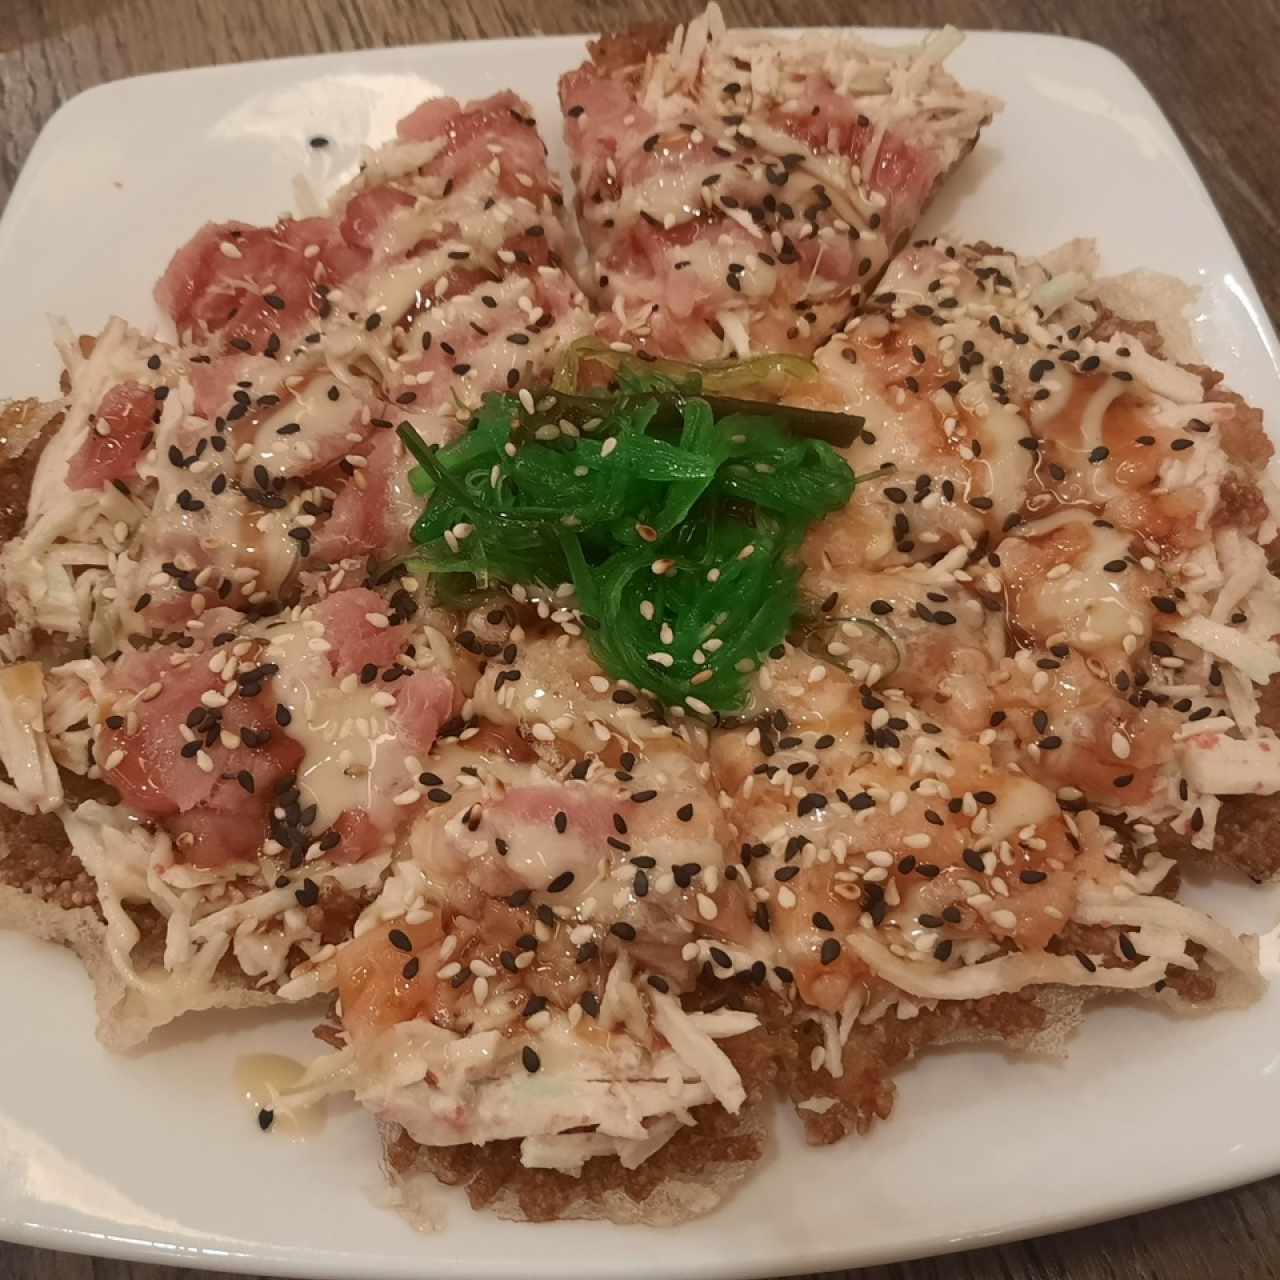 Entradas Calientes - Pizza Tataki salmón